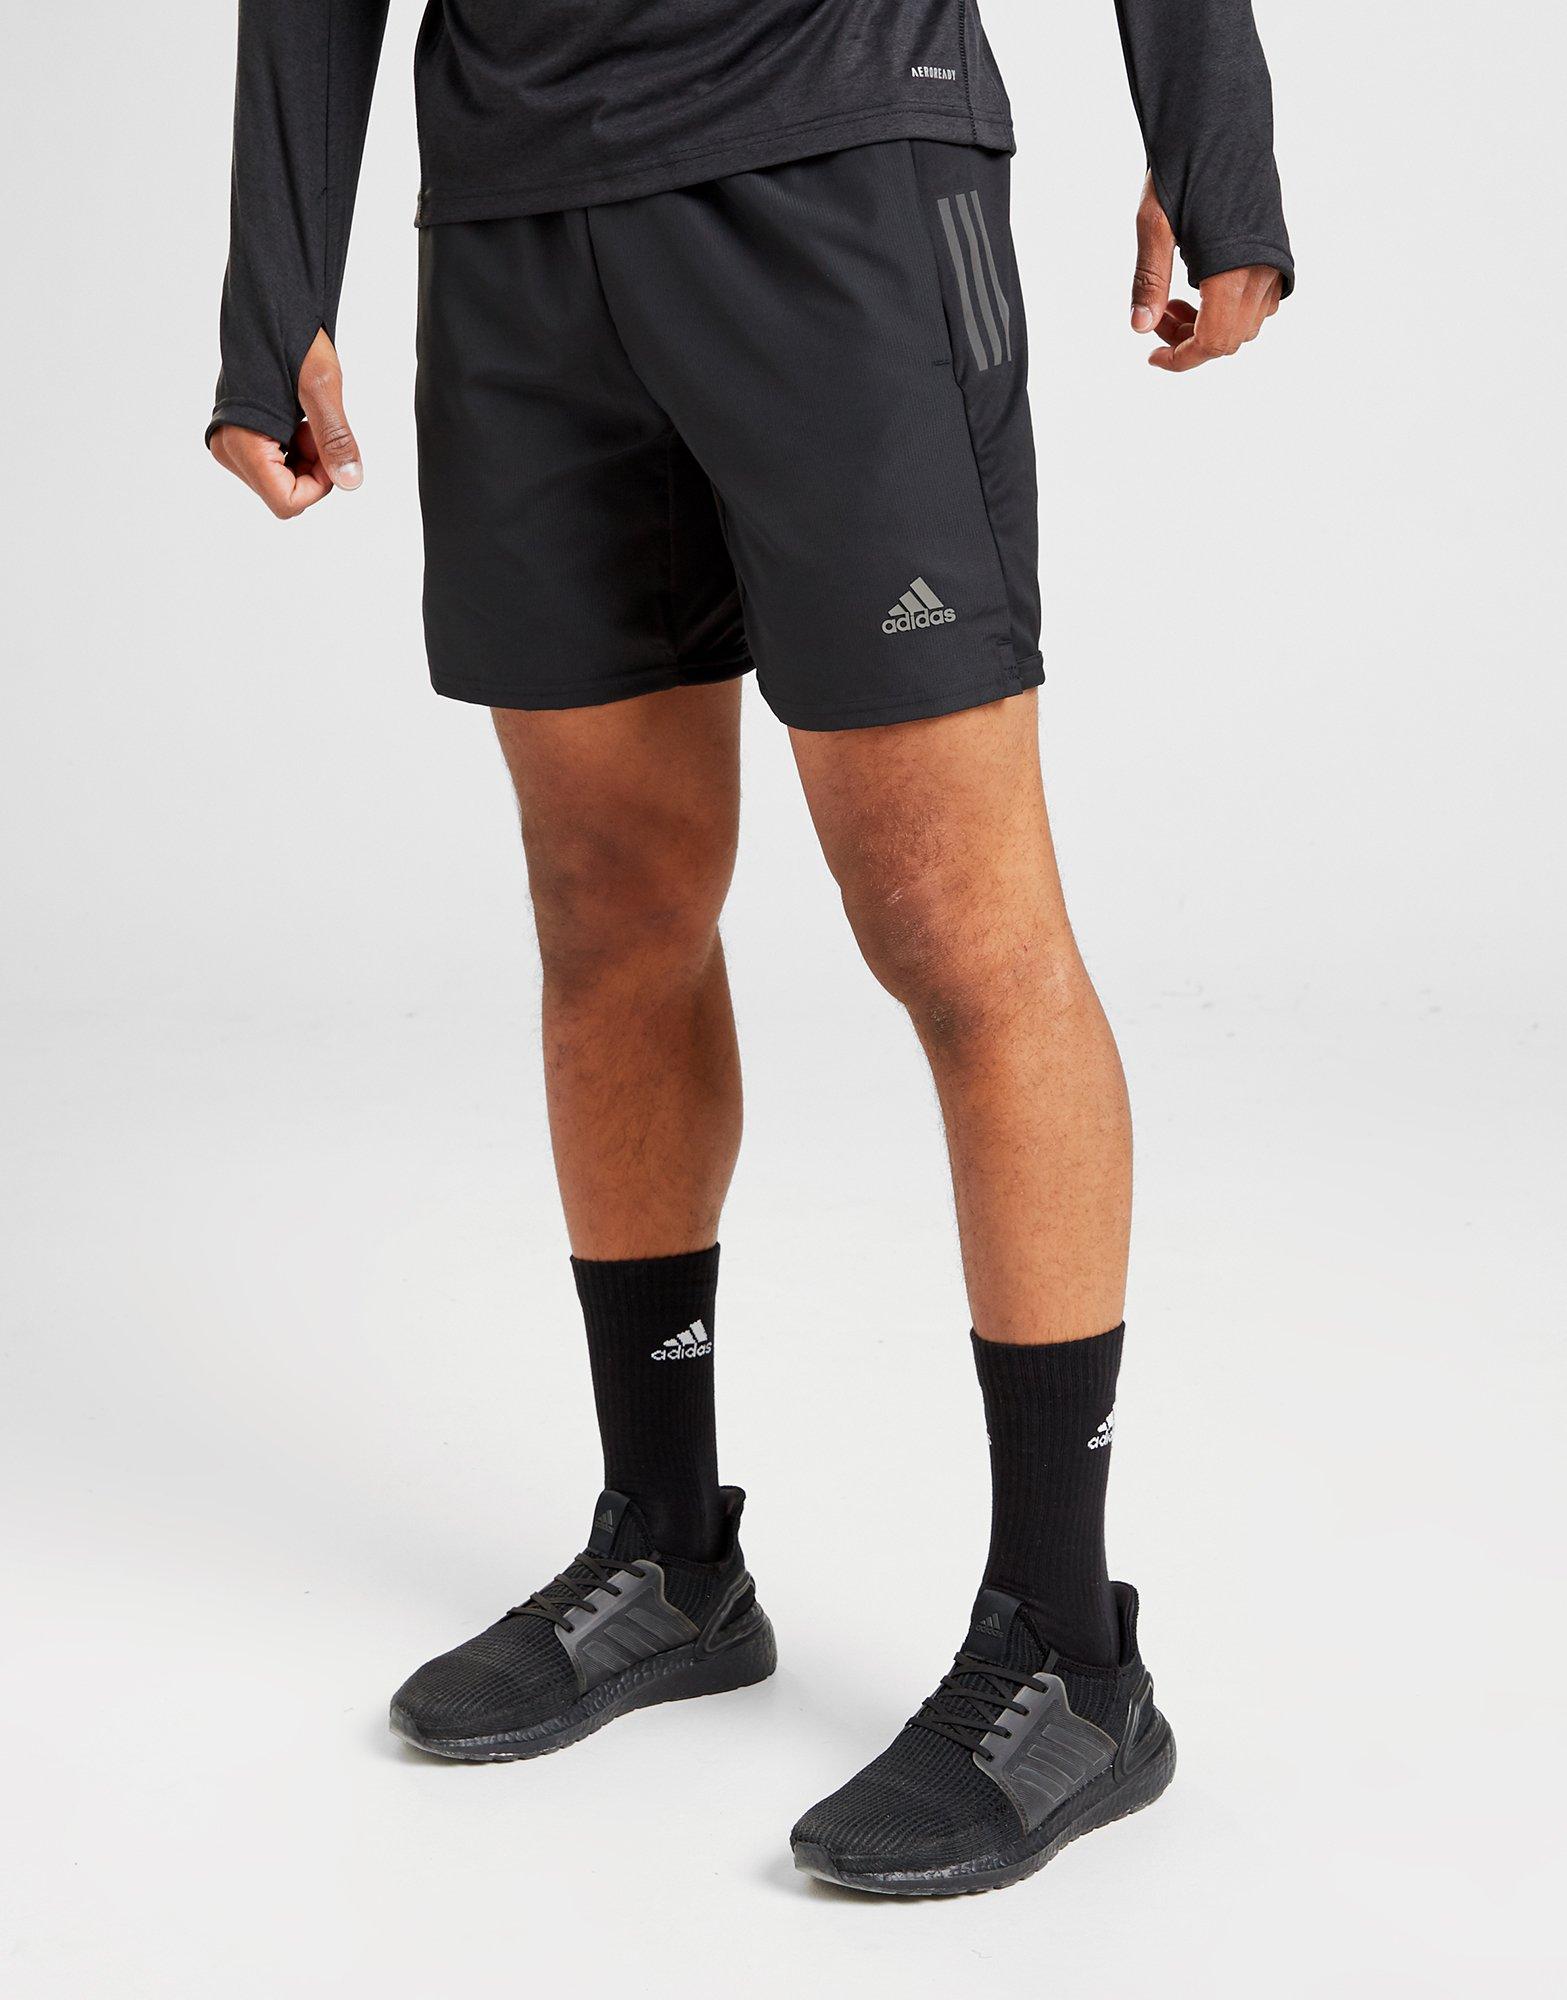 Buy Black adidas Tech Reflective Shorts 